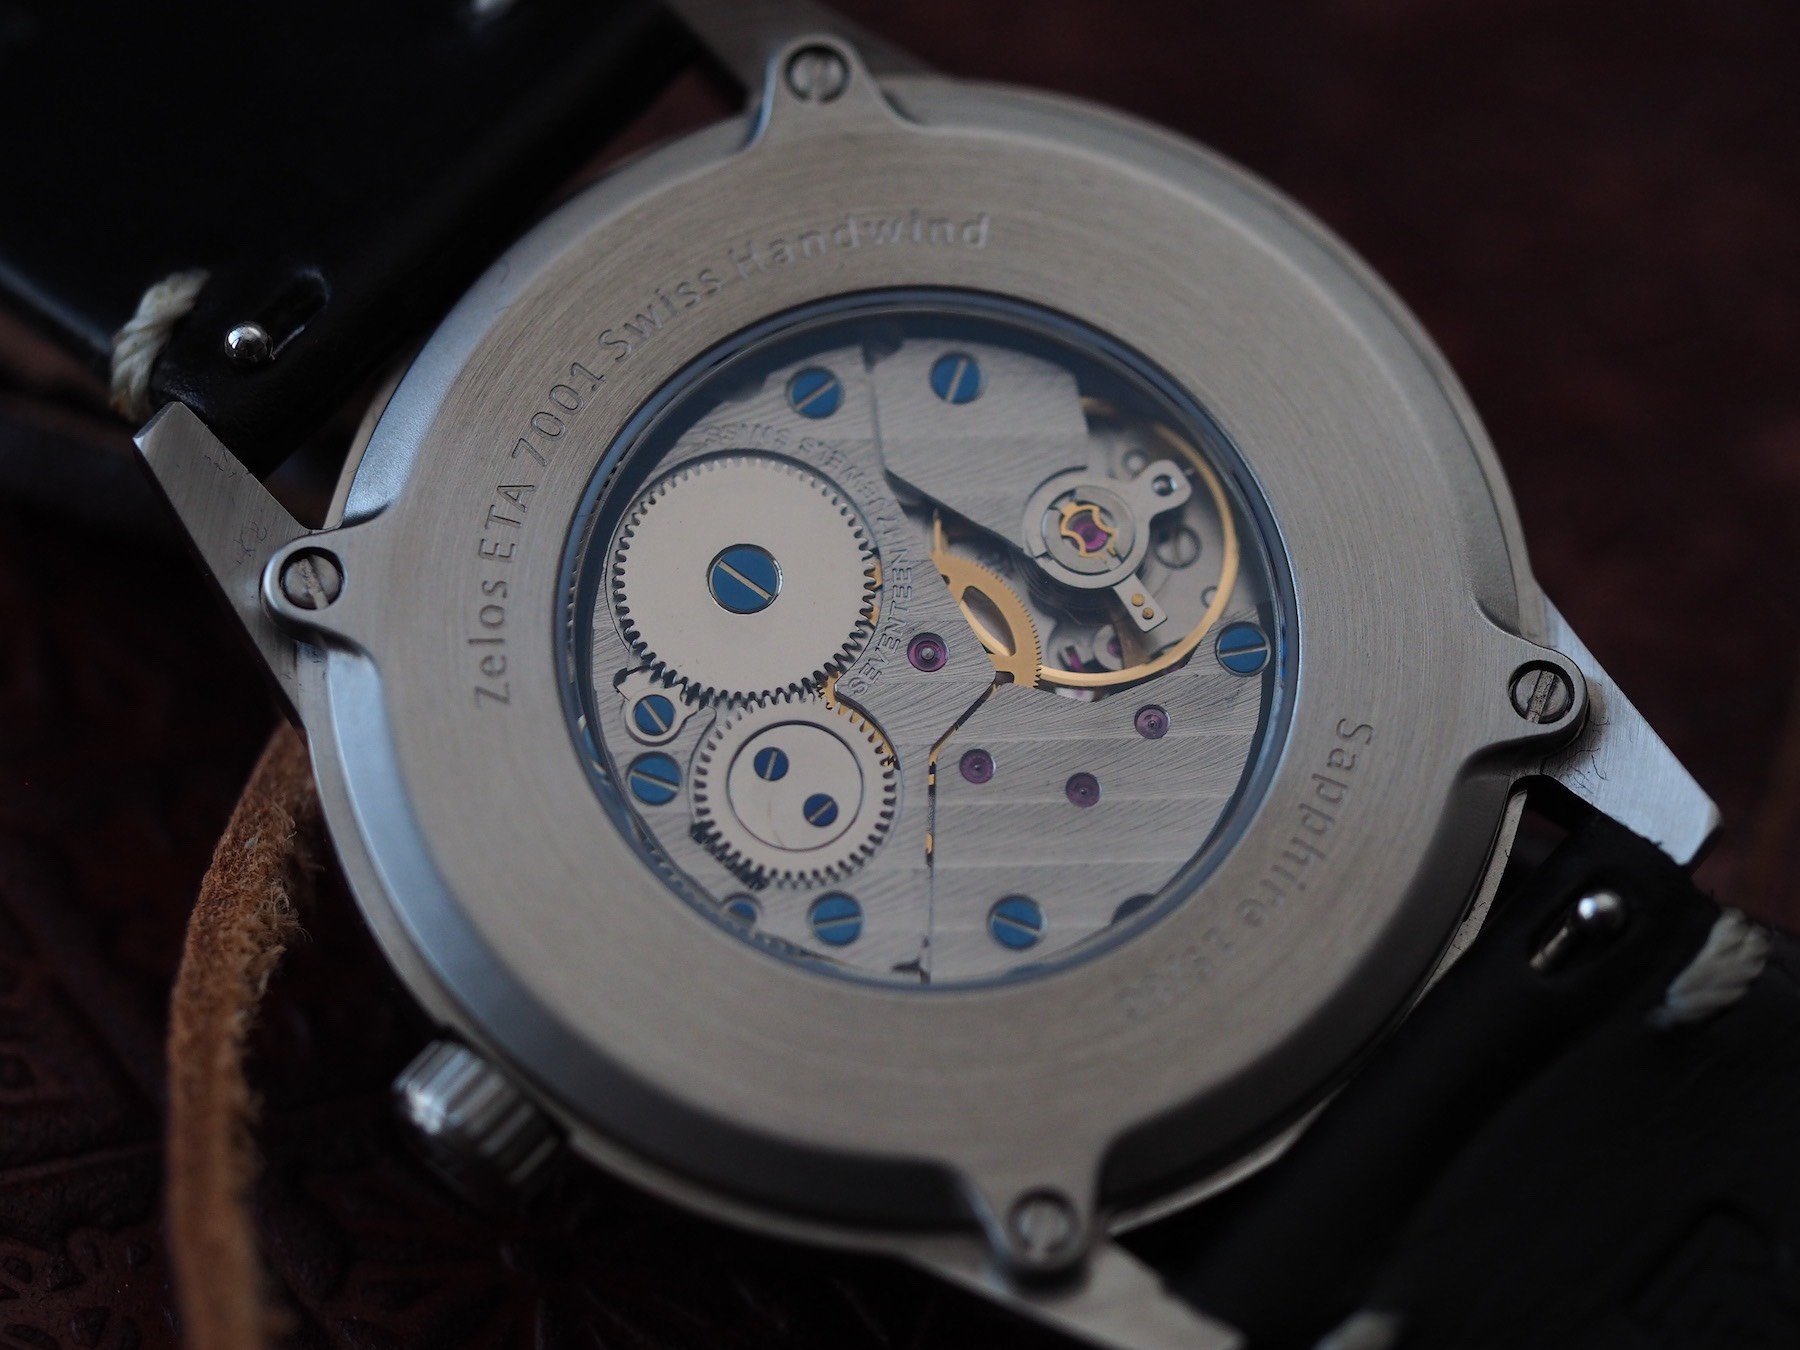 Zelos Experimental Swiss Auto Chronograph Watch